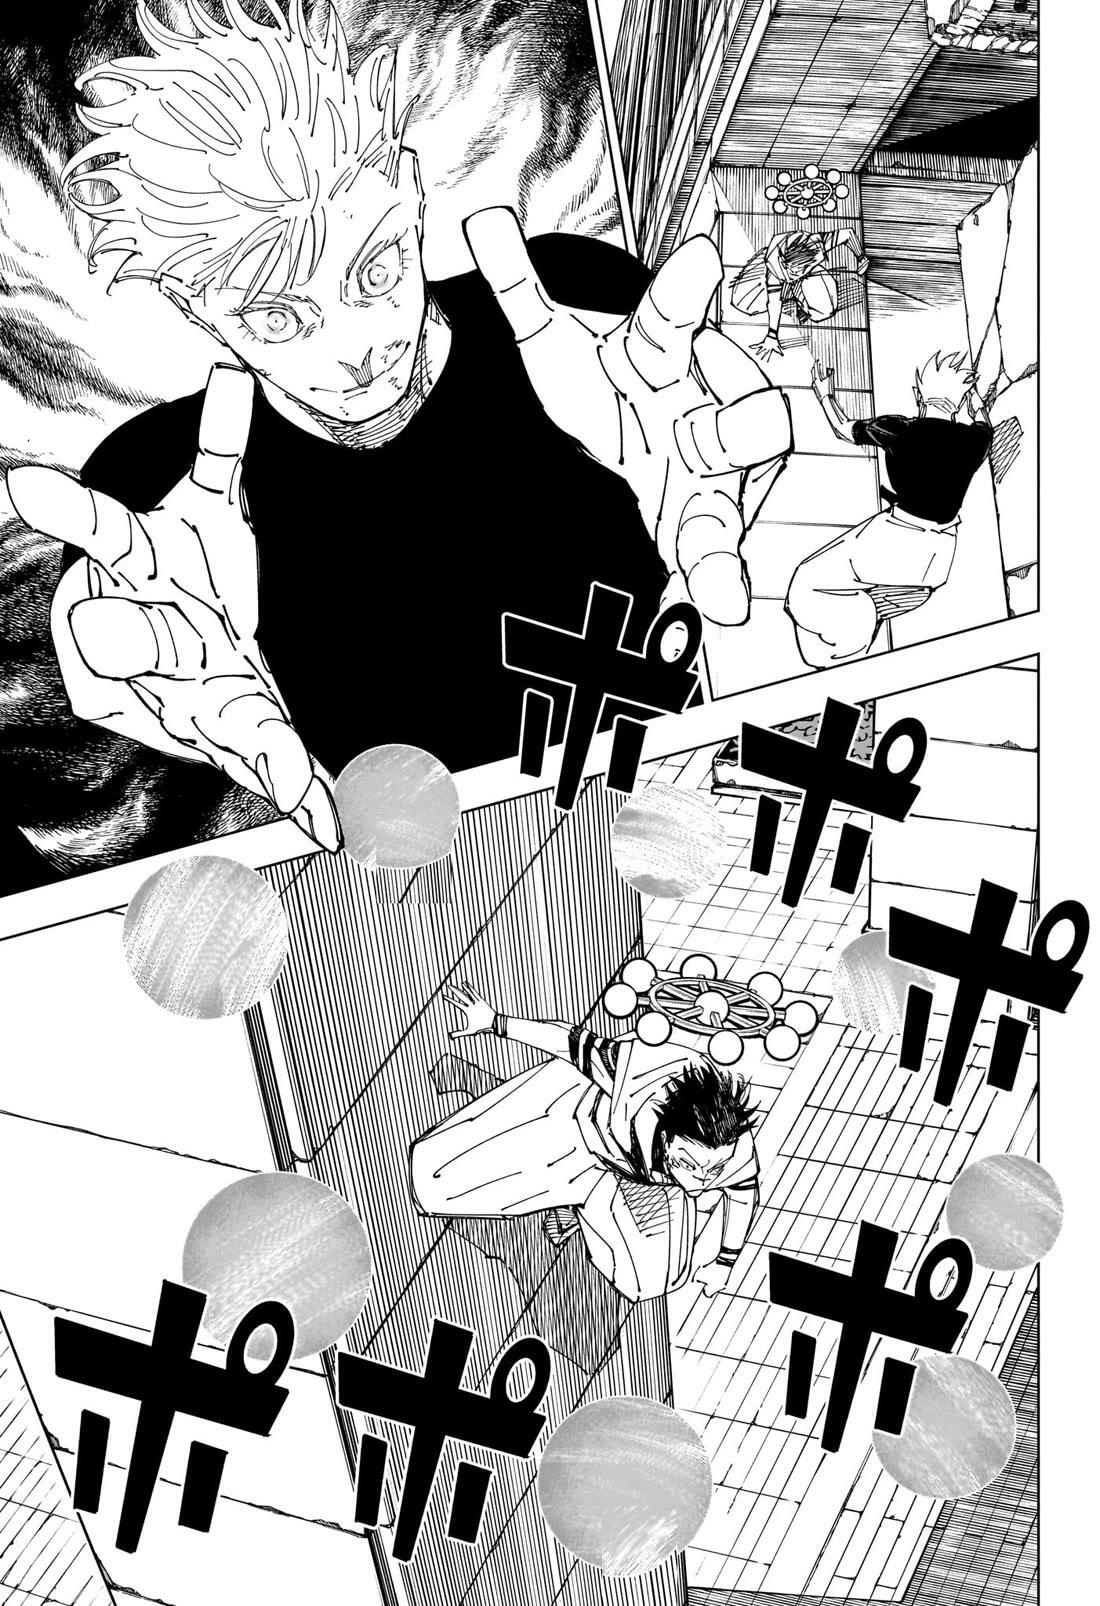 Jujutsu Kaisen Chapter 232: The Decisive Battle In The Uninhabited, Demon-Infested Shinjuku ⑩ page 4 - Mangakakalot